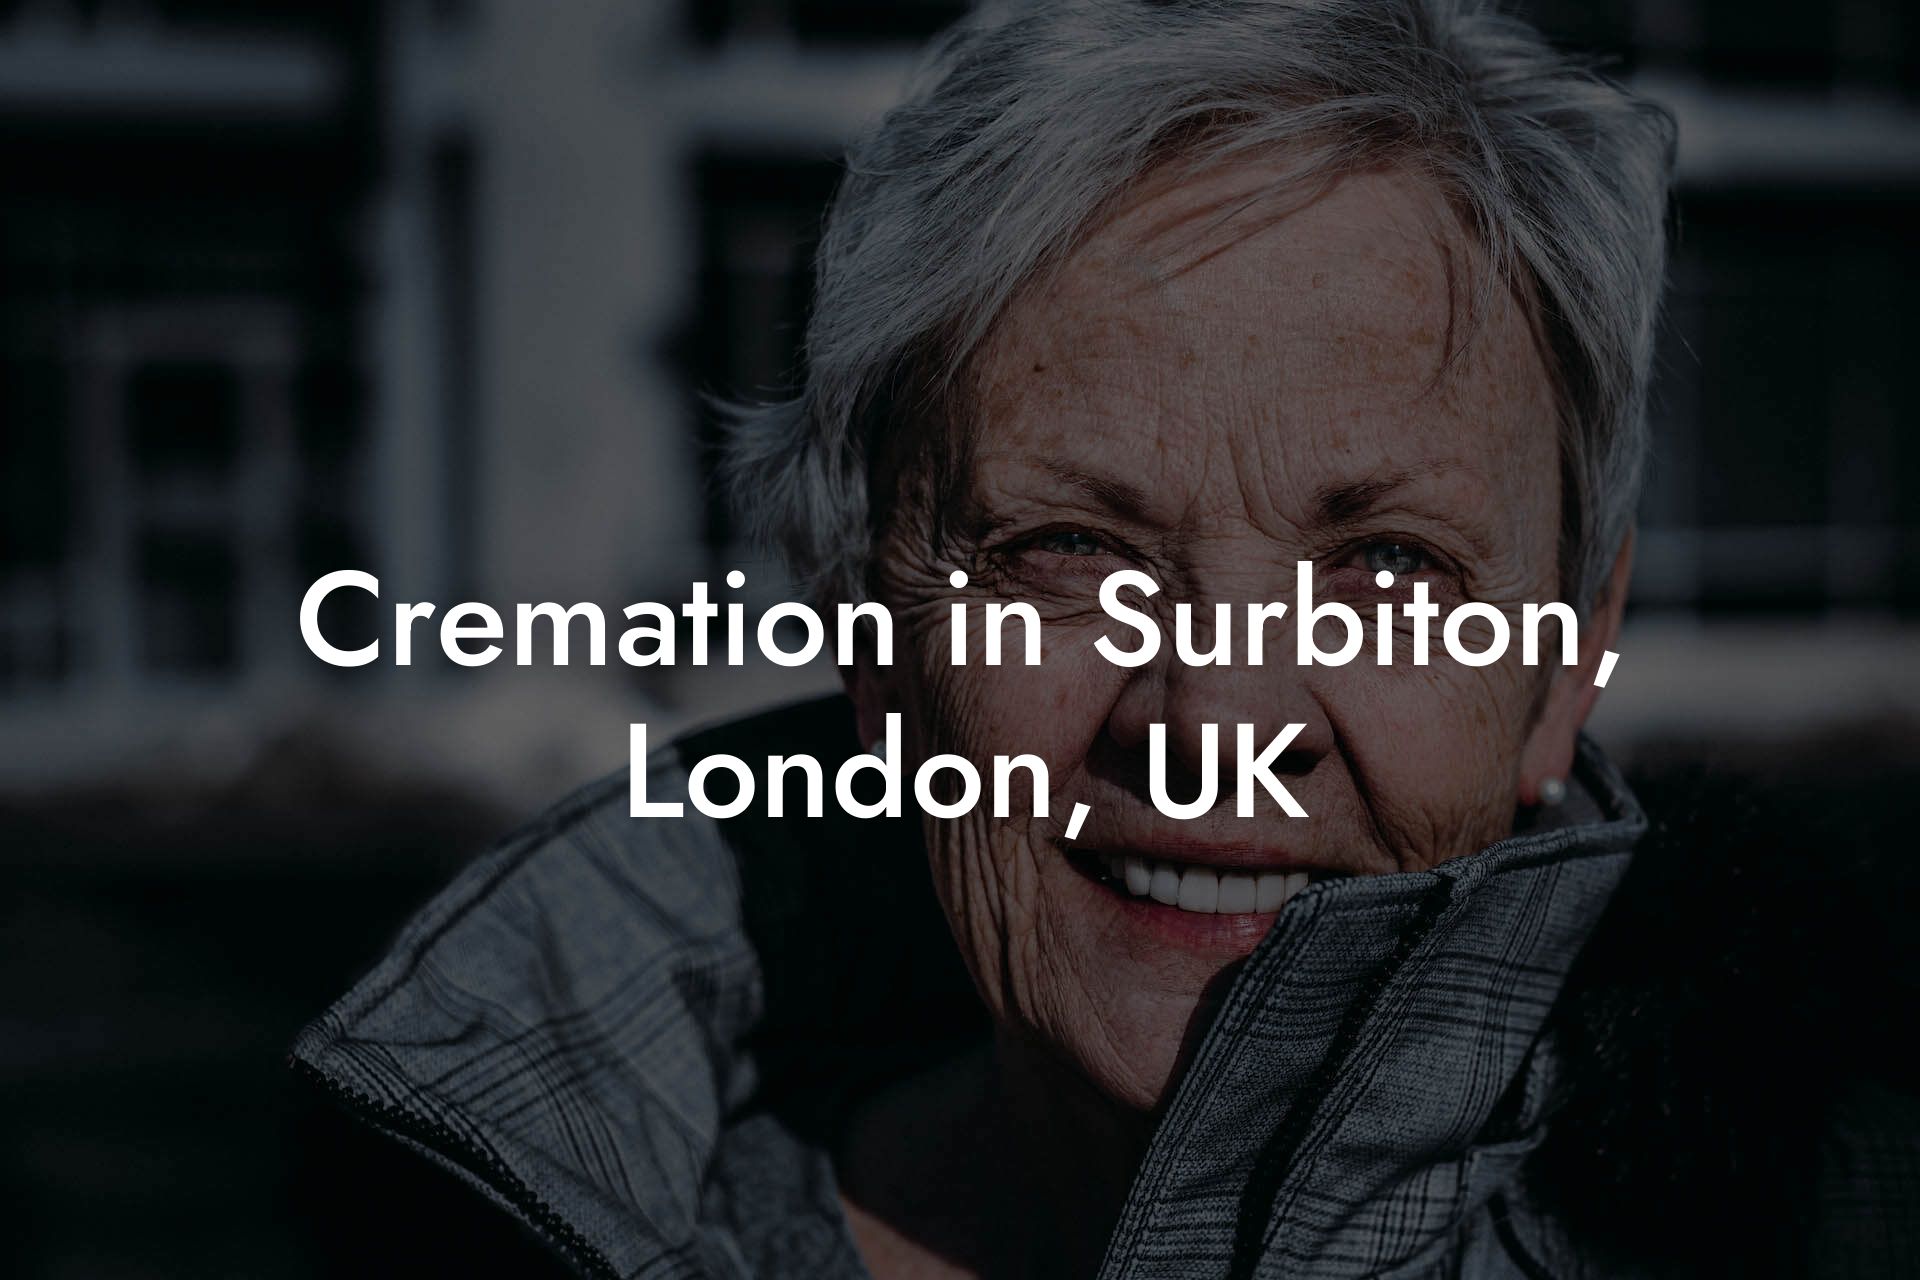 Cremation in Surbiton, London, UK